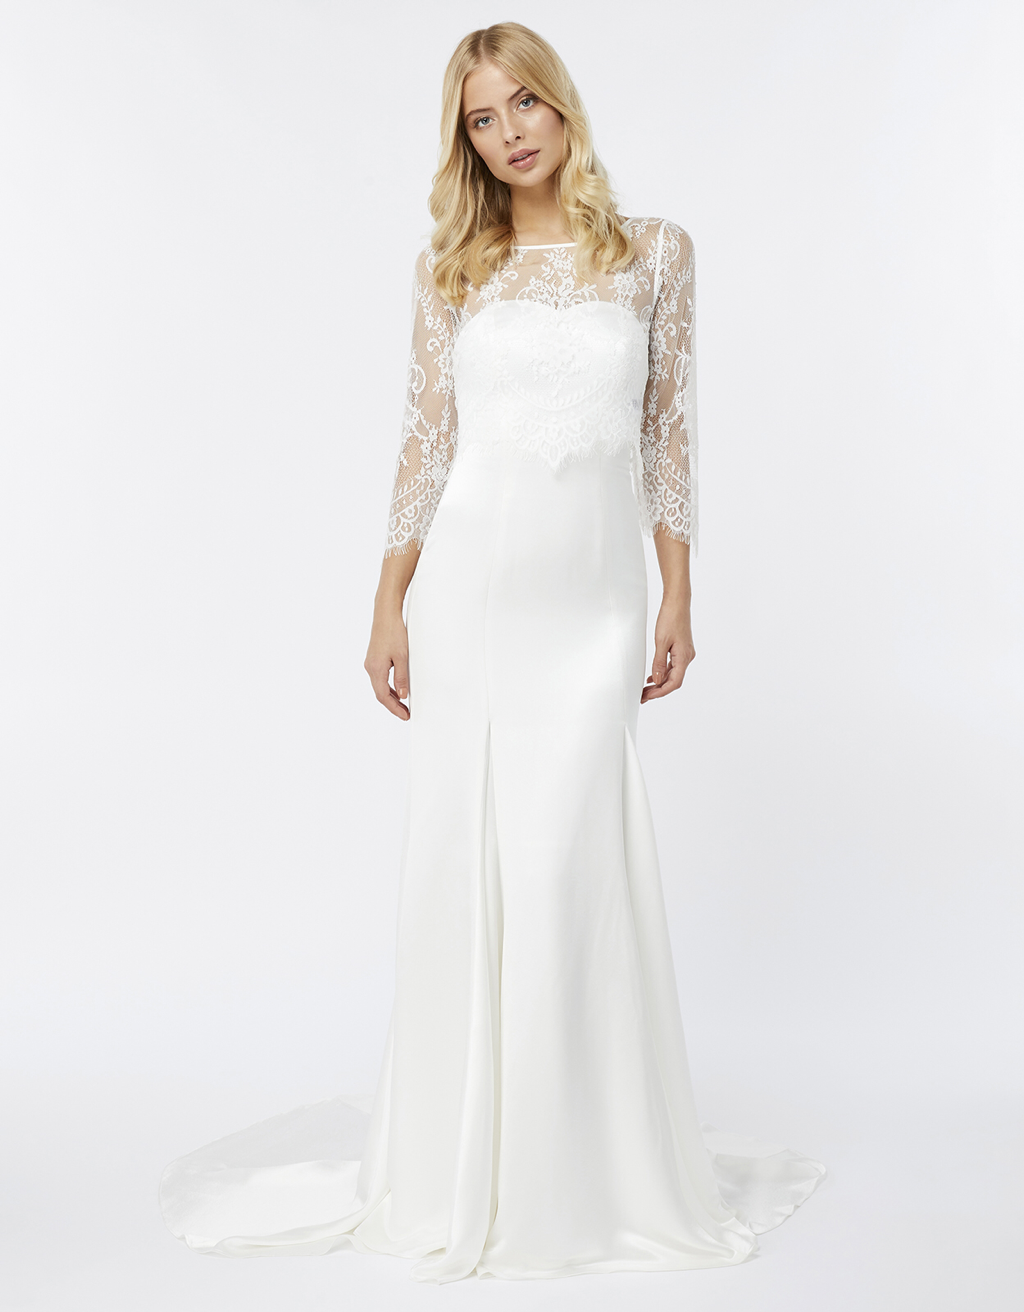 Budget Sheath and Column Wedding Dress - SaveOnTheDate